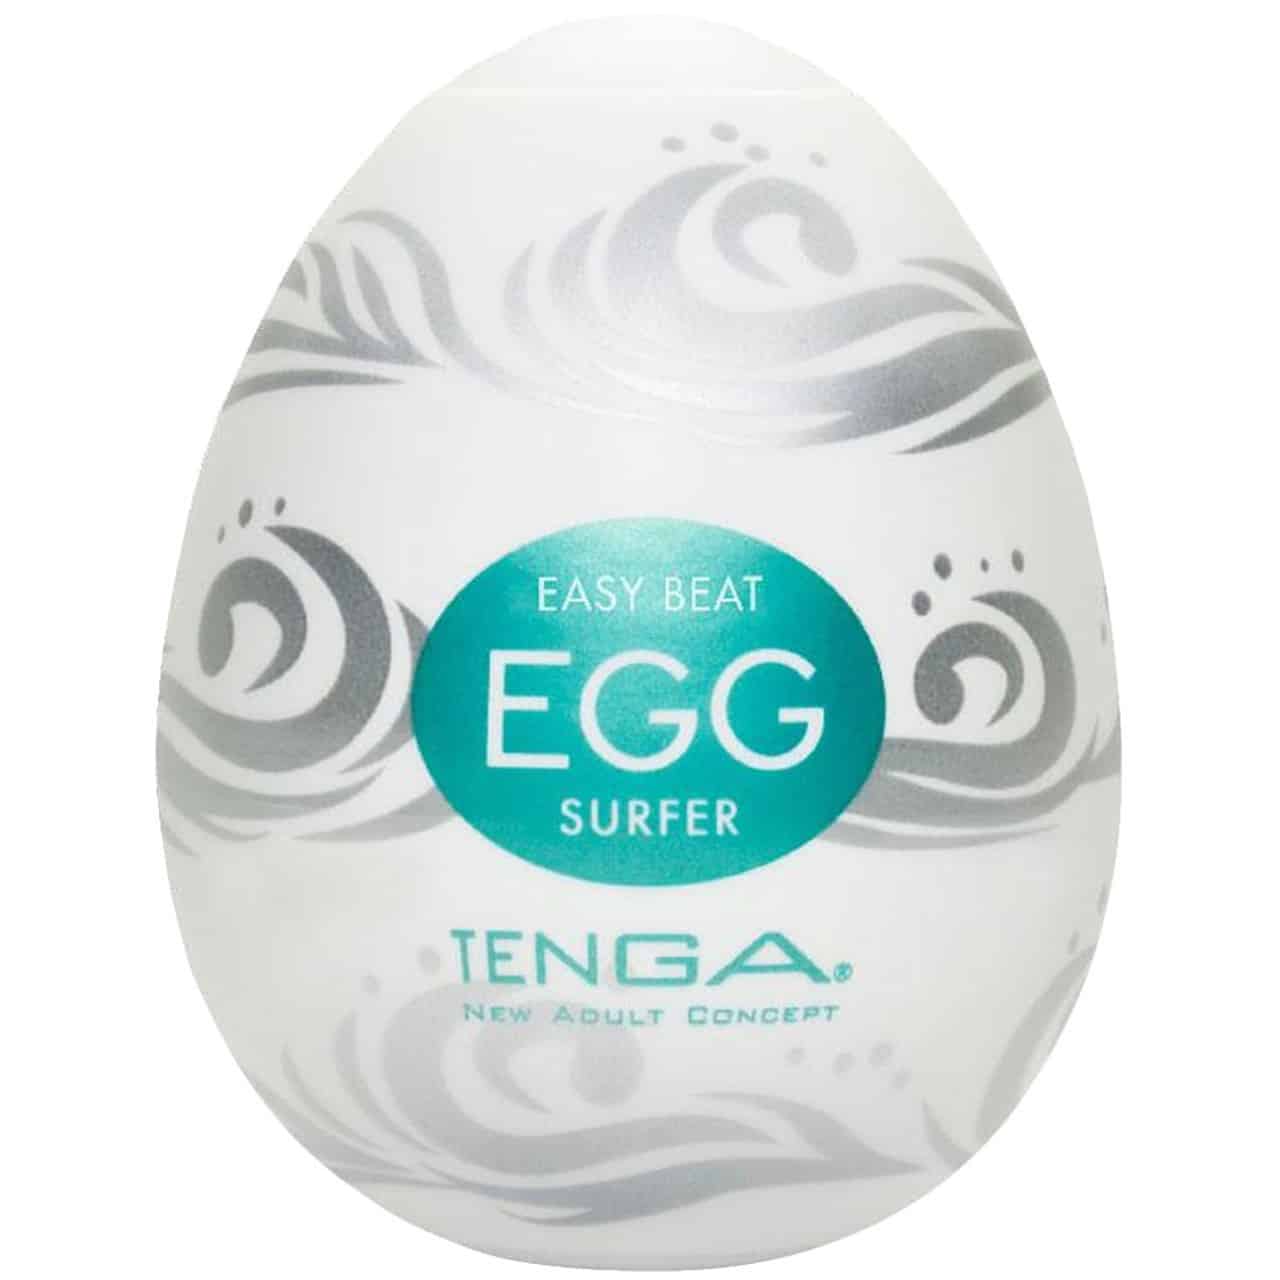 Product Tenga Egg Surfer